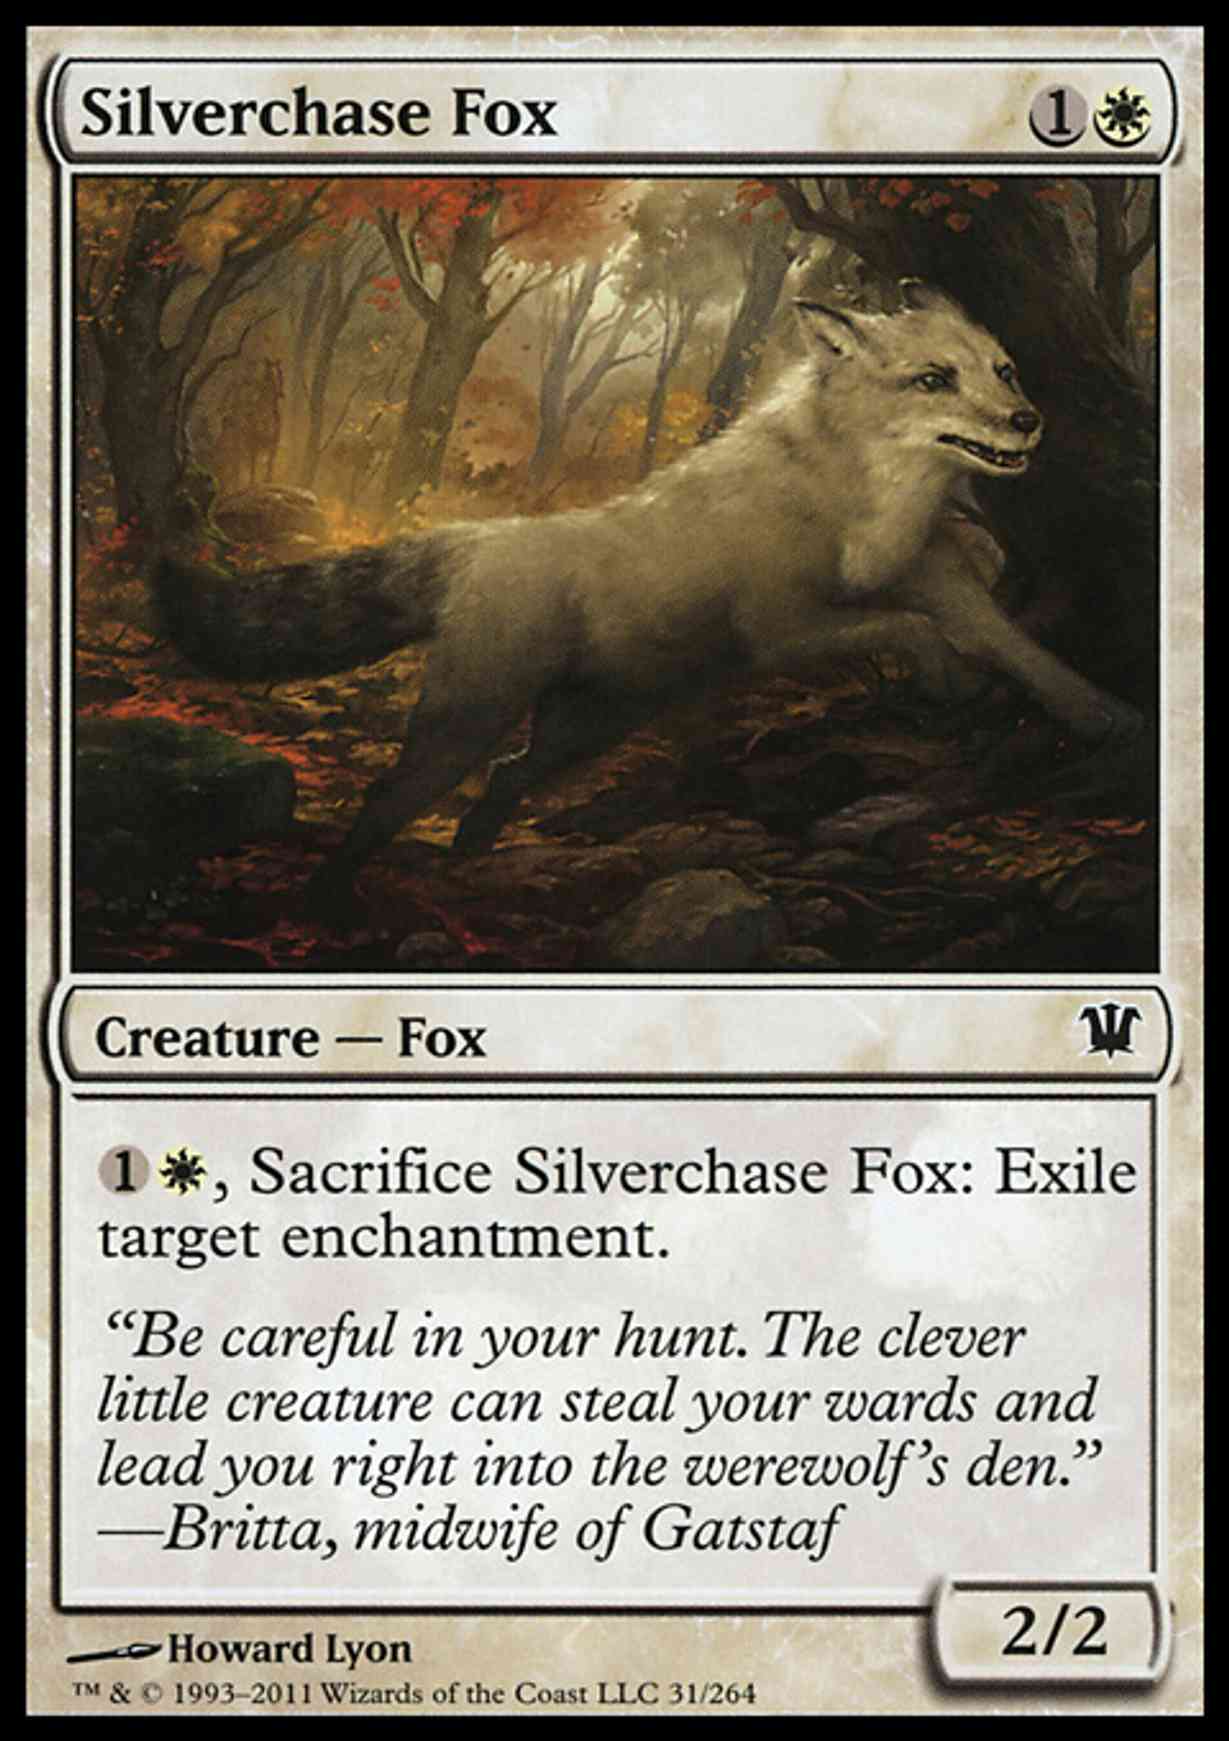 Silverchase Fox magic card front